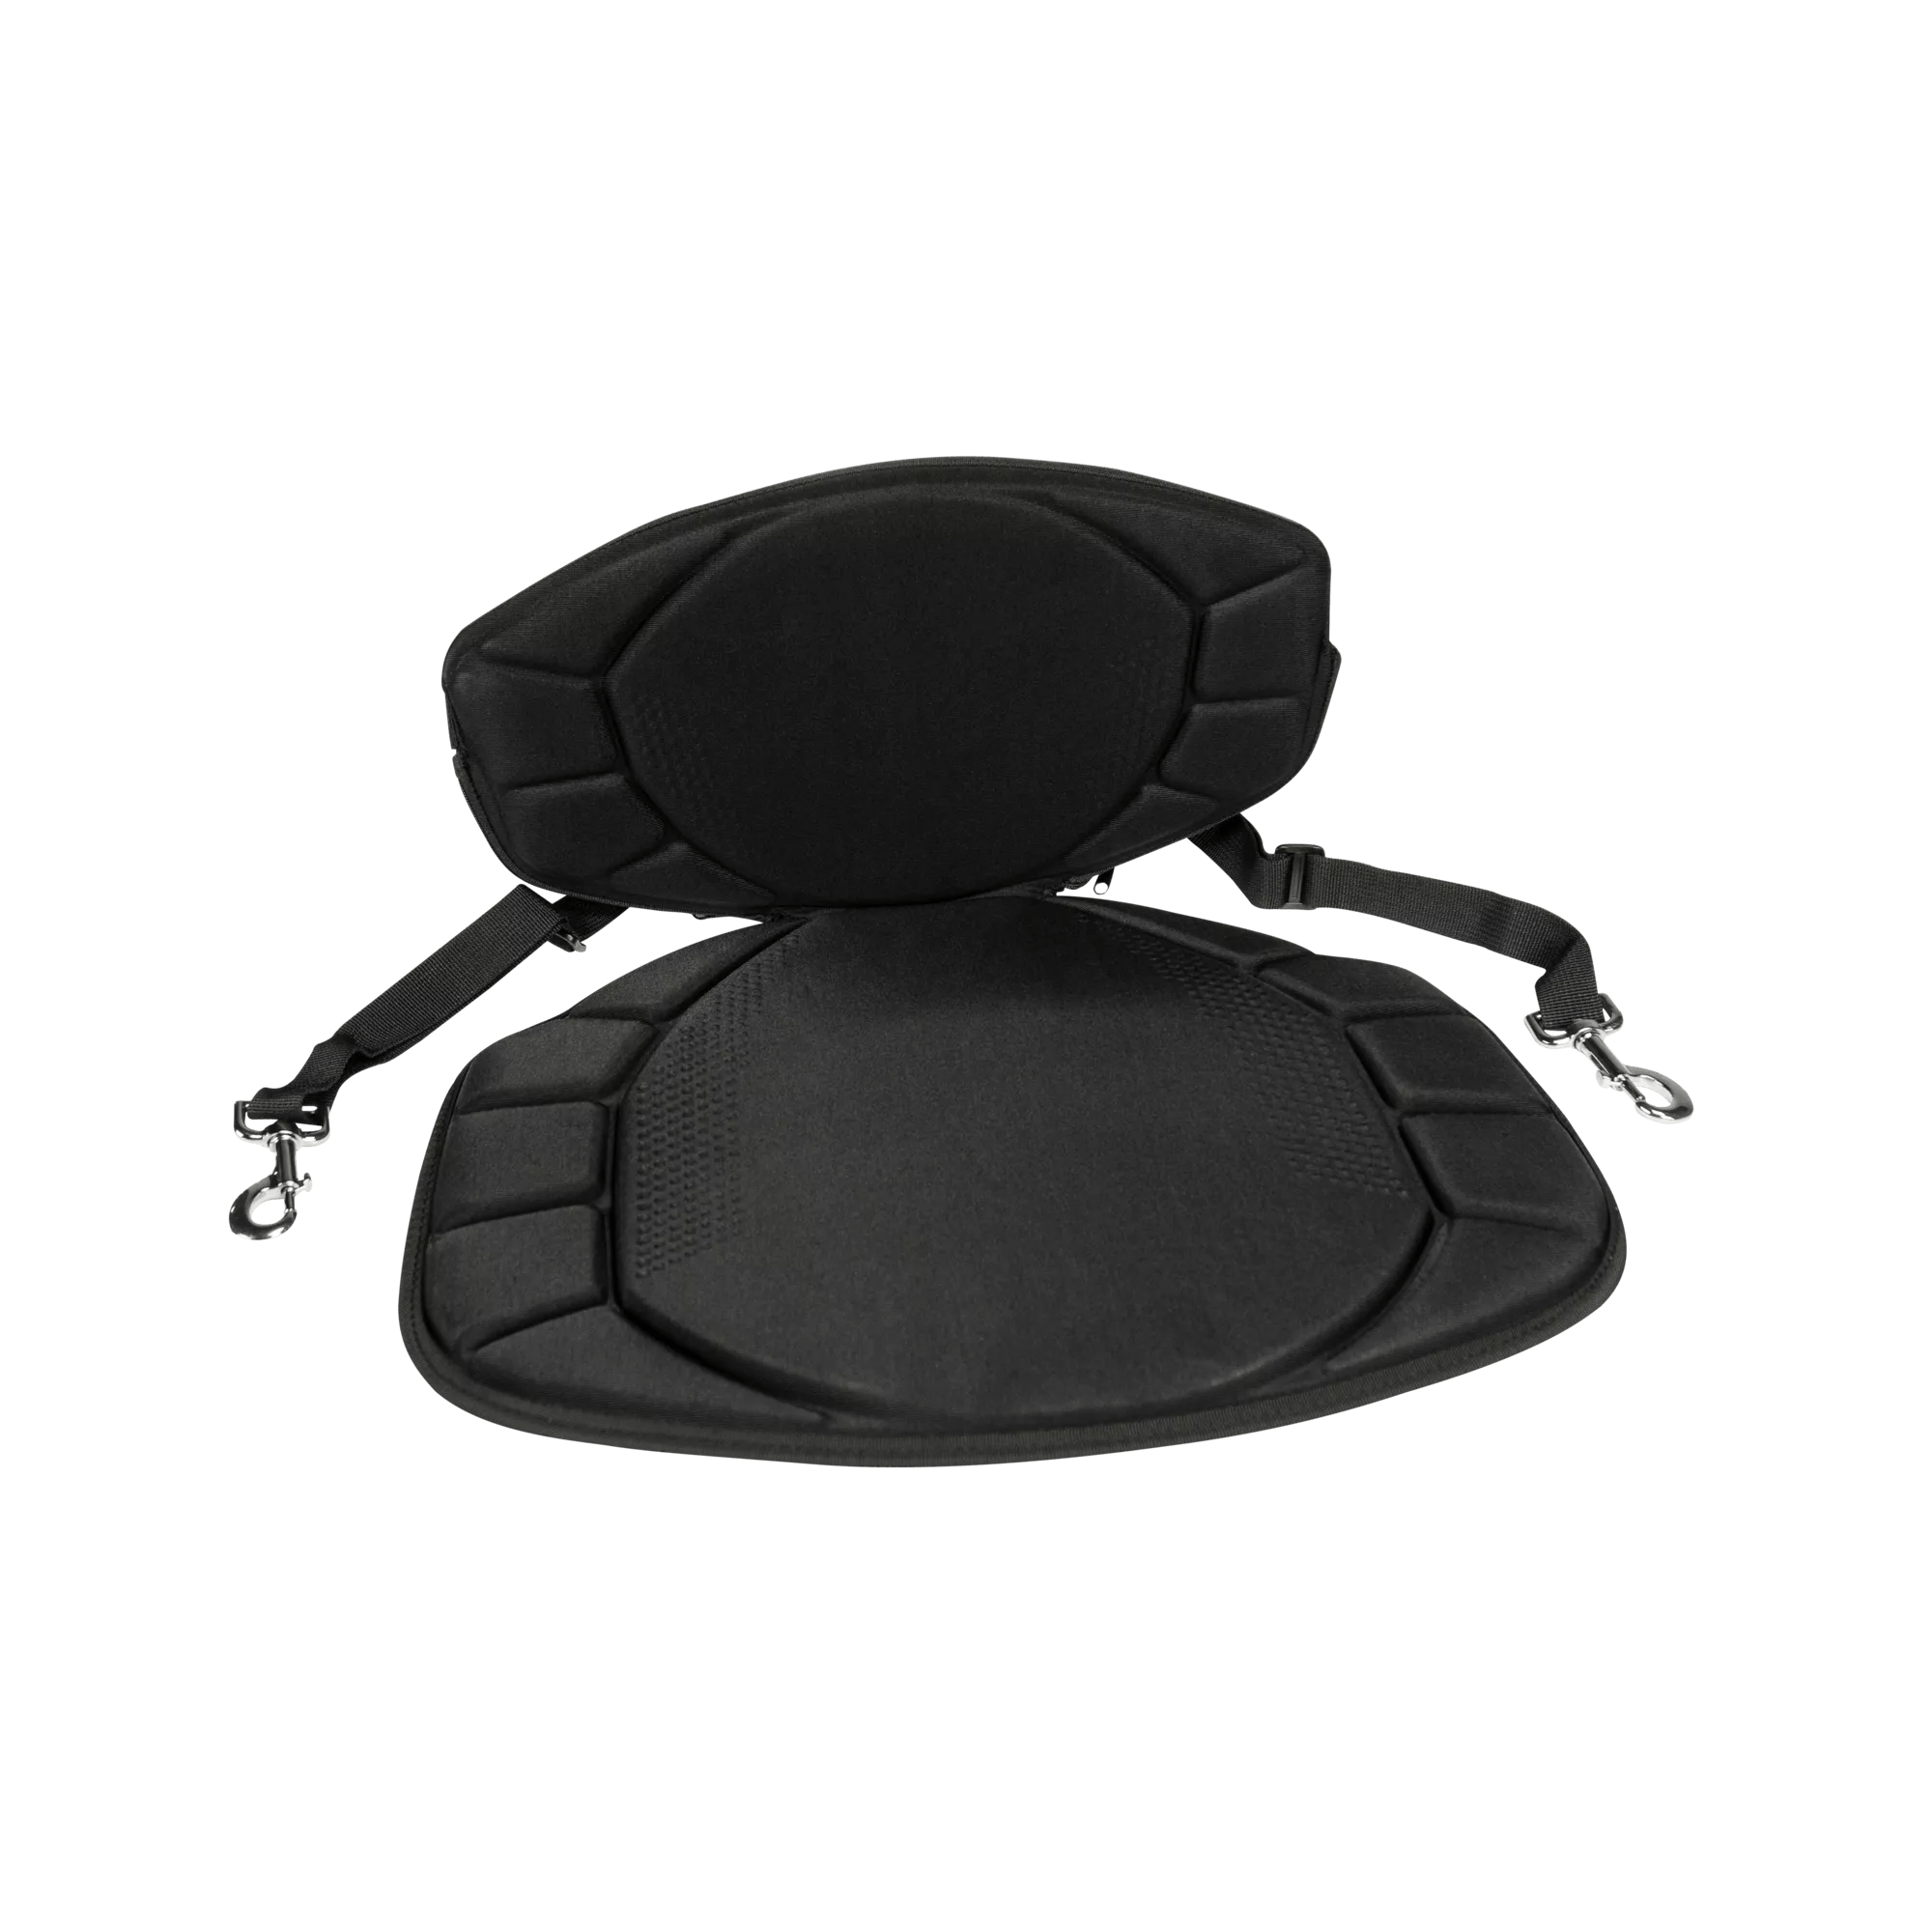 PELICAN - Adjustable Padded Kayak Seat - Black - PS0480-3 - ISO 